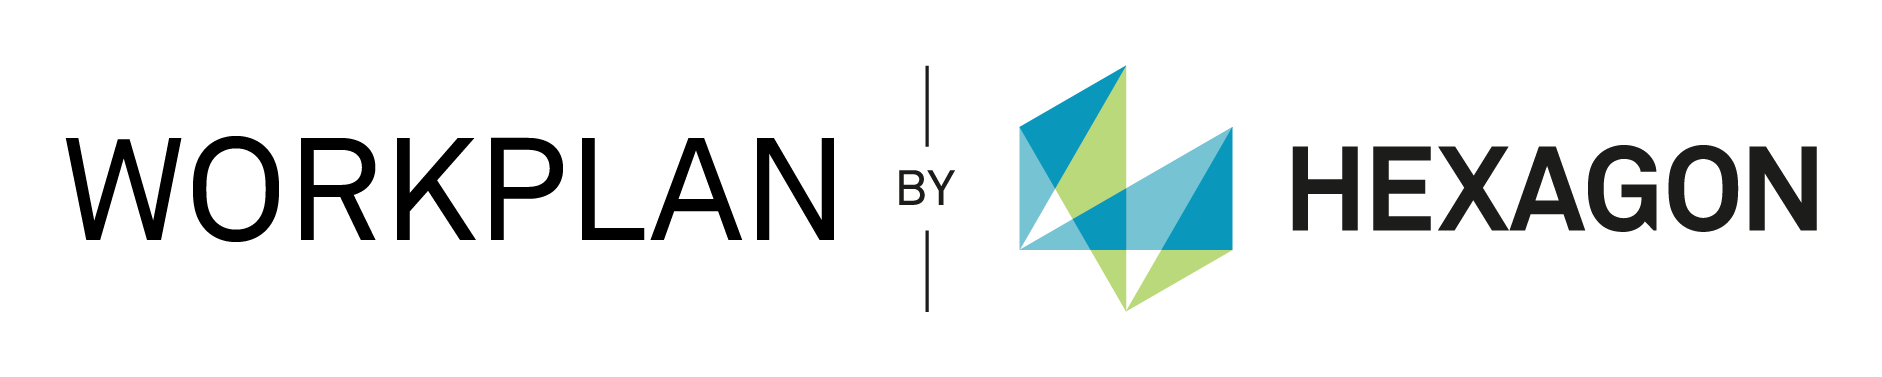 Hexagon WORKPLAN logo